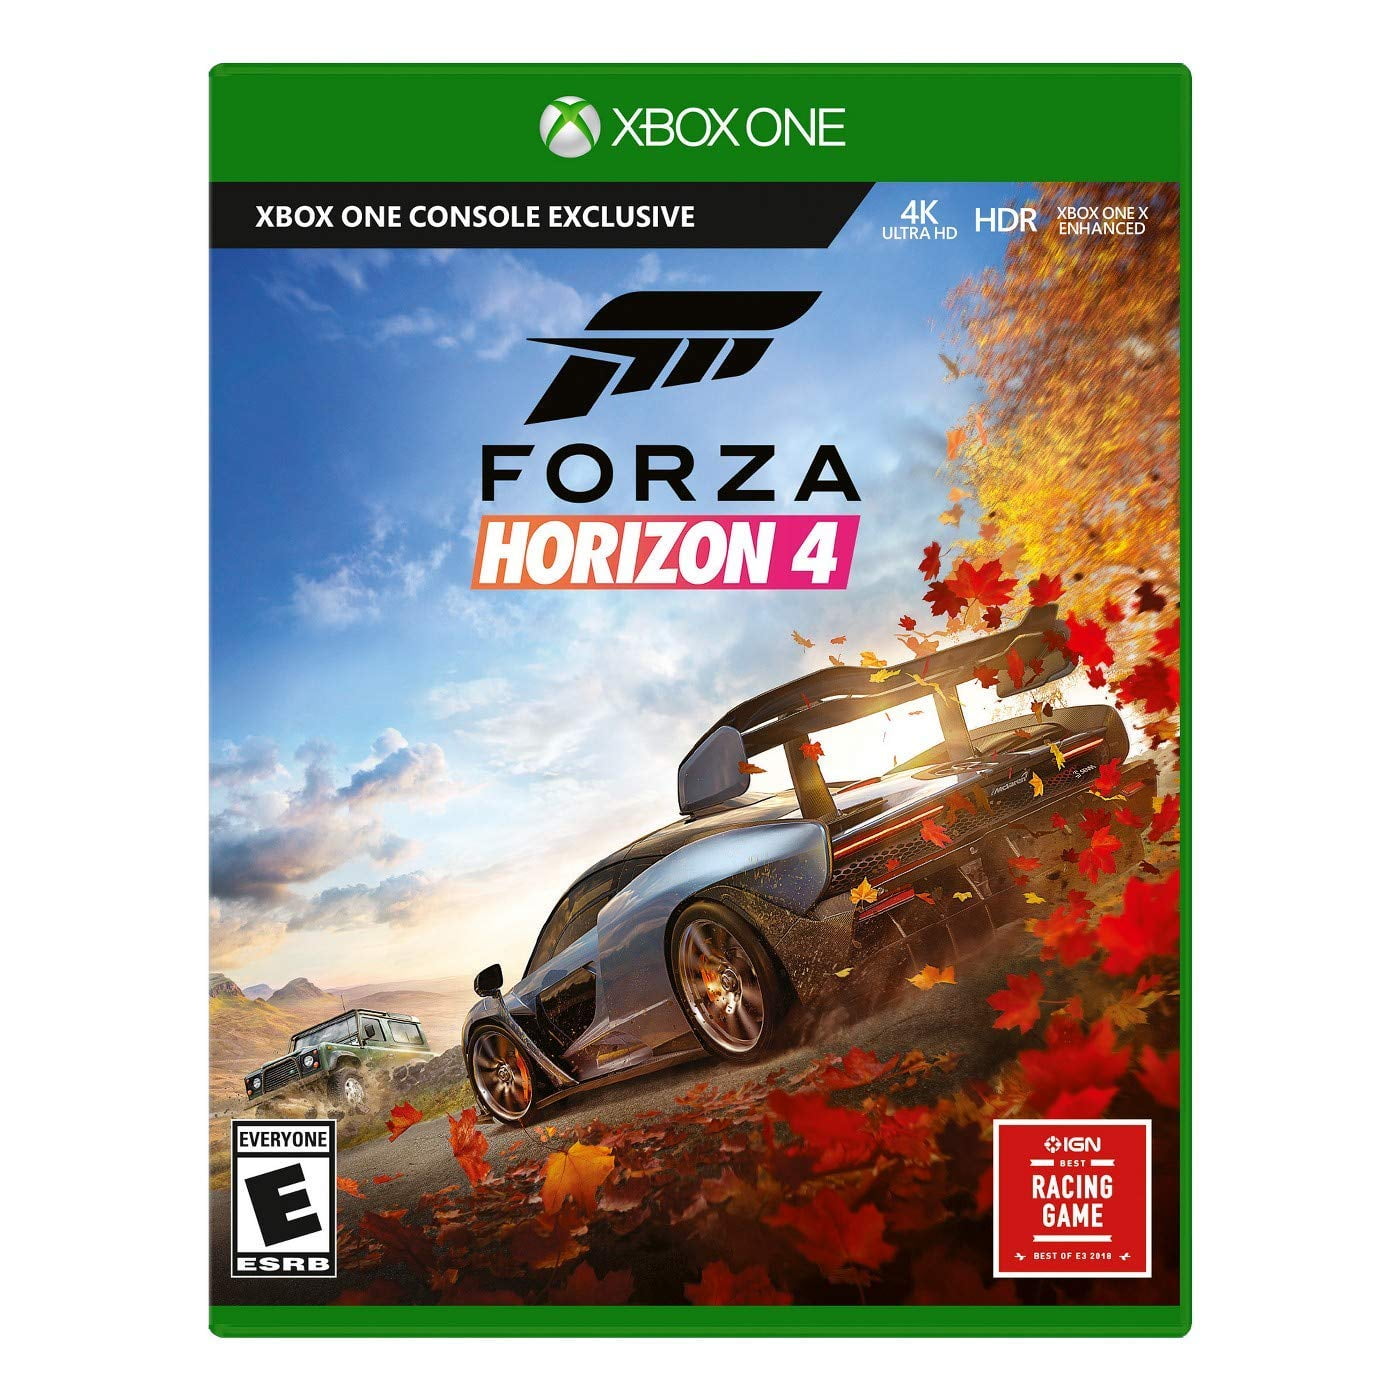 Xbox One S Nba 2k19 Forza Bonus Bundle Nba 2k 19 Forza Horizon 4 Xbox One S 1tb Console With Extra Wireless Controller Walmart Com Walmart Com - roblox hallows eve xbox trailer 2018 ign